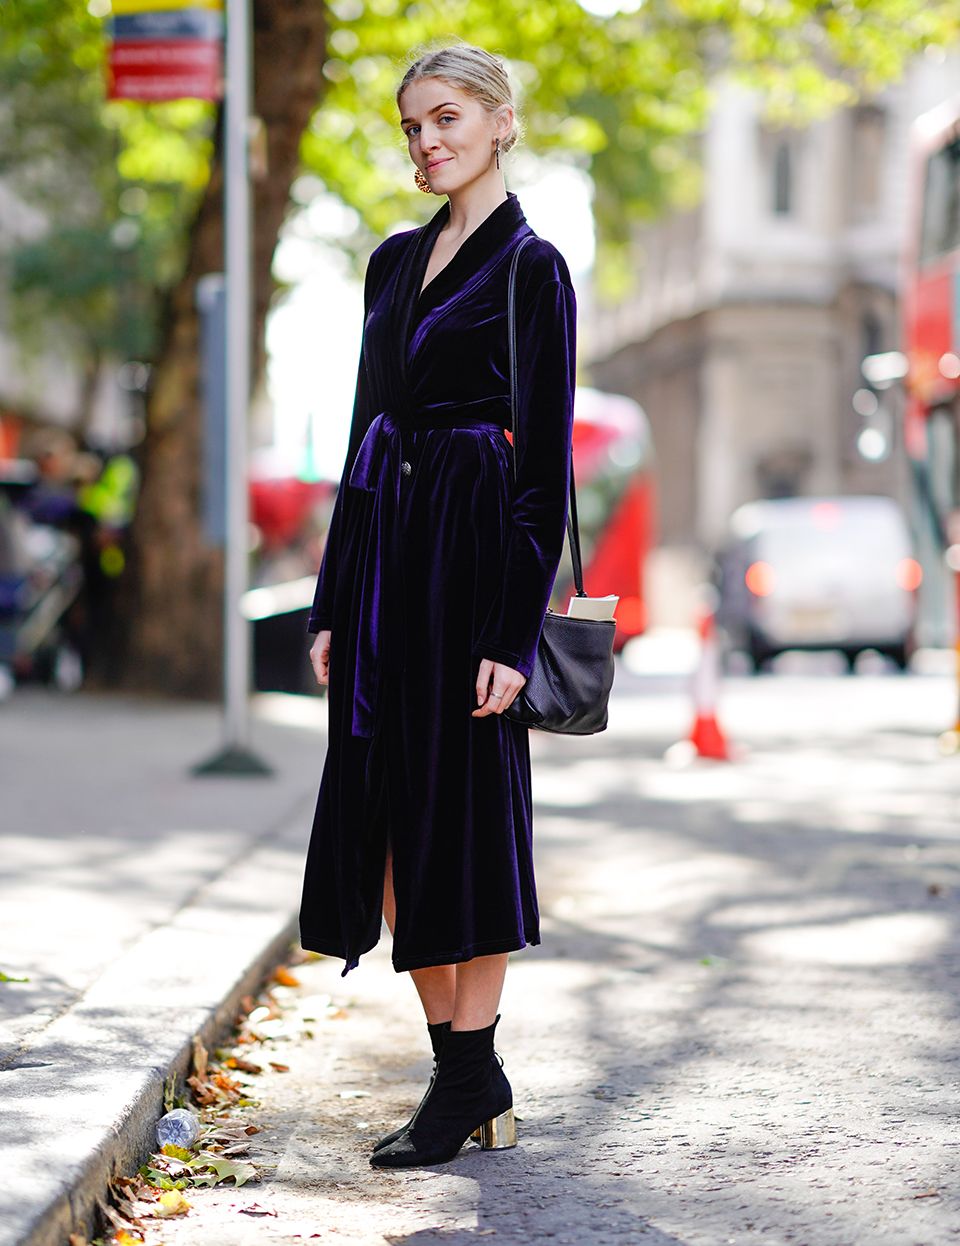 Velvet Outfit Ideas - 50+ Stylish Ways to Wear Velvet